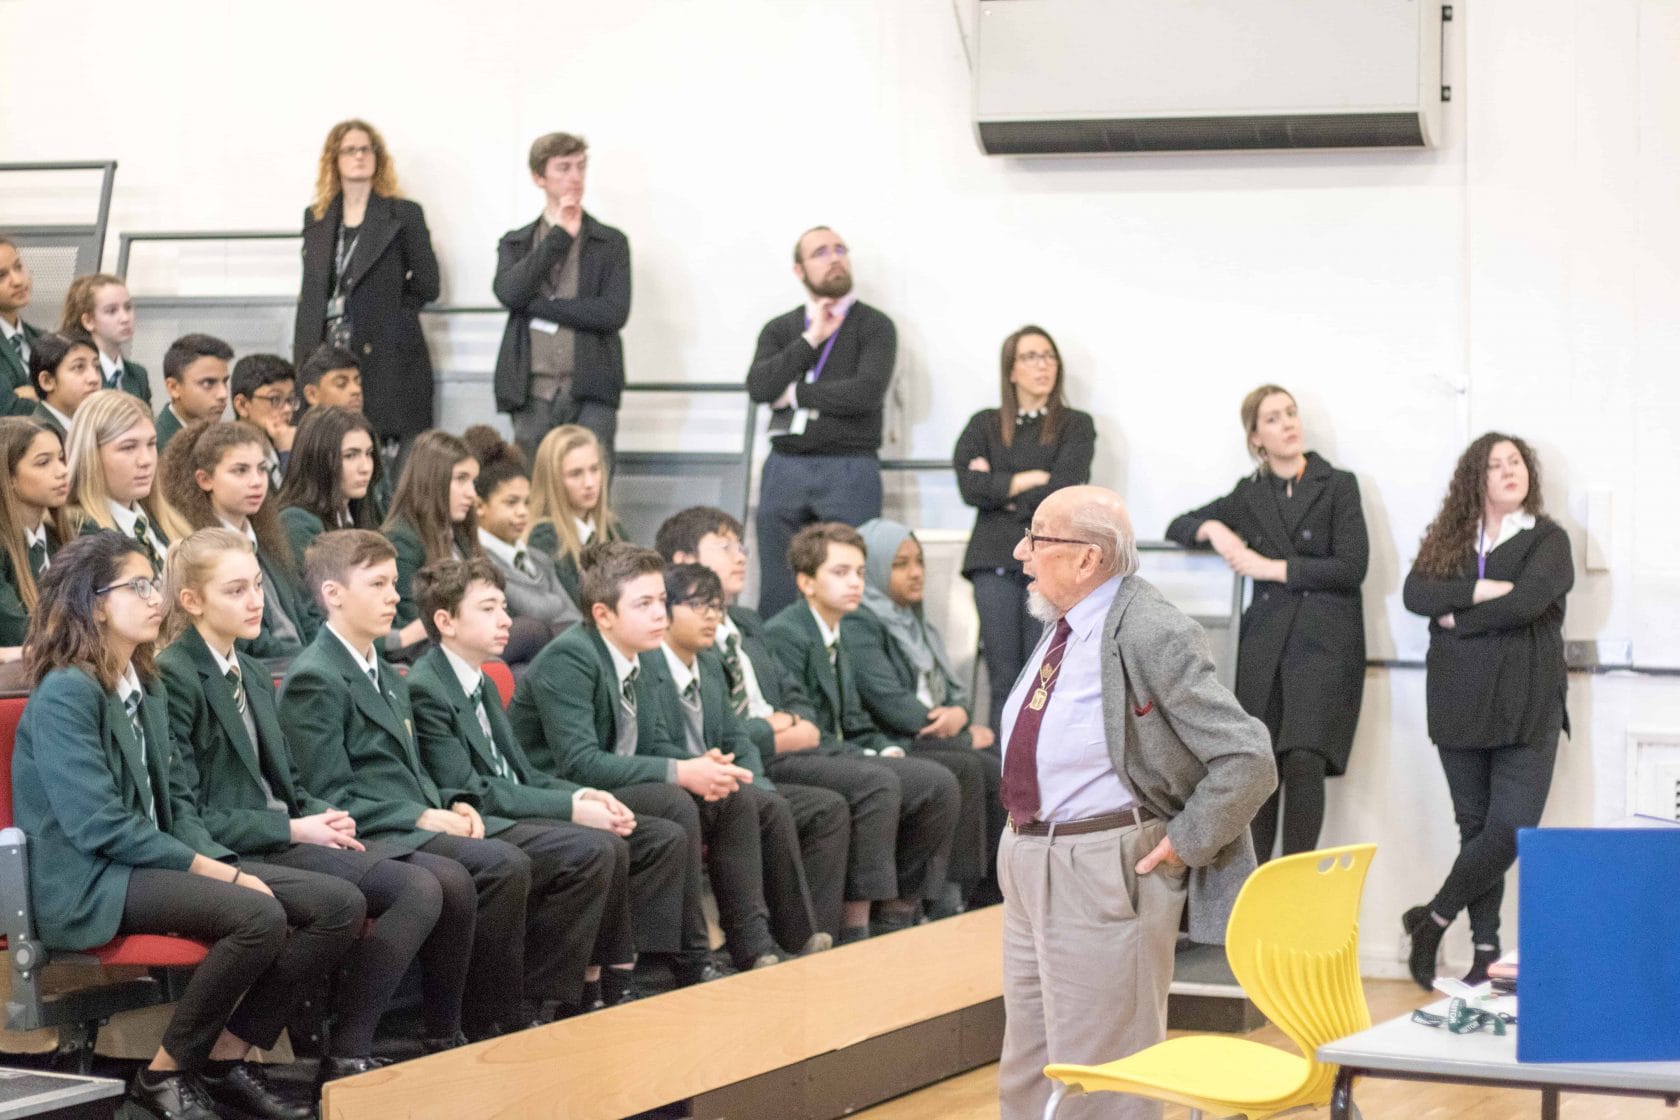 Harry Bibring’s visit to Bushey Meads School